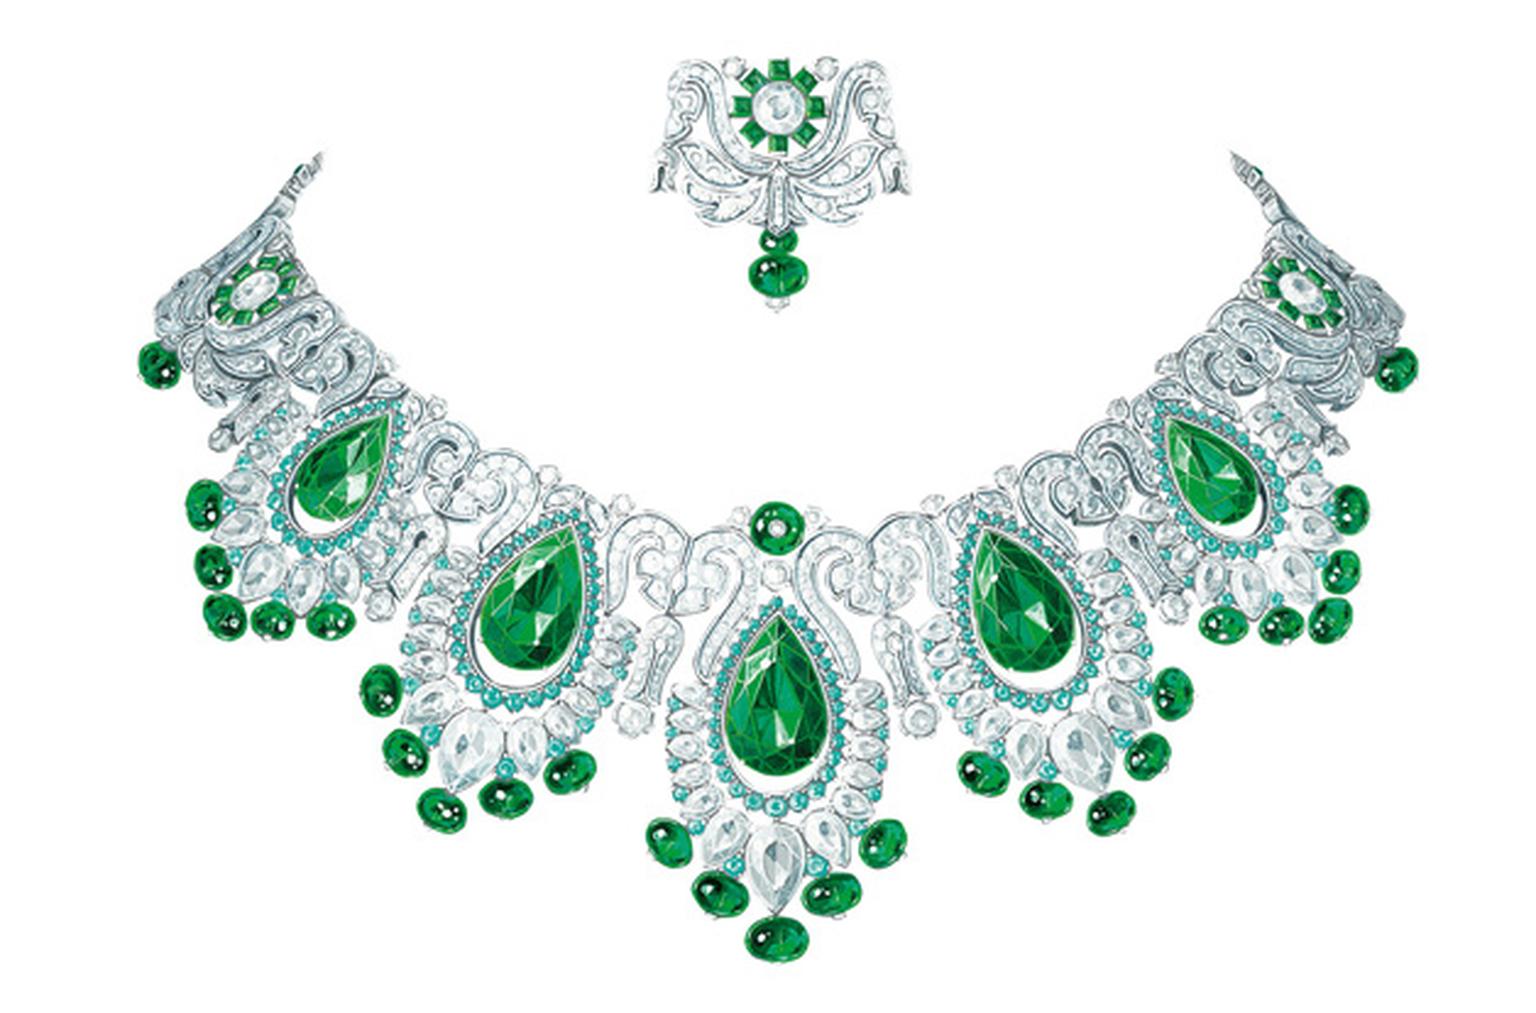 Van Cleef & Arpels Pierres de Caractère Baia Verde necklace with 33.29ct pear-shaped Zambian emeralds